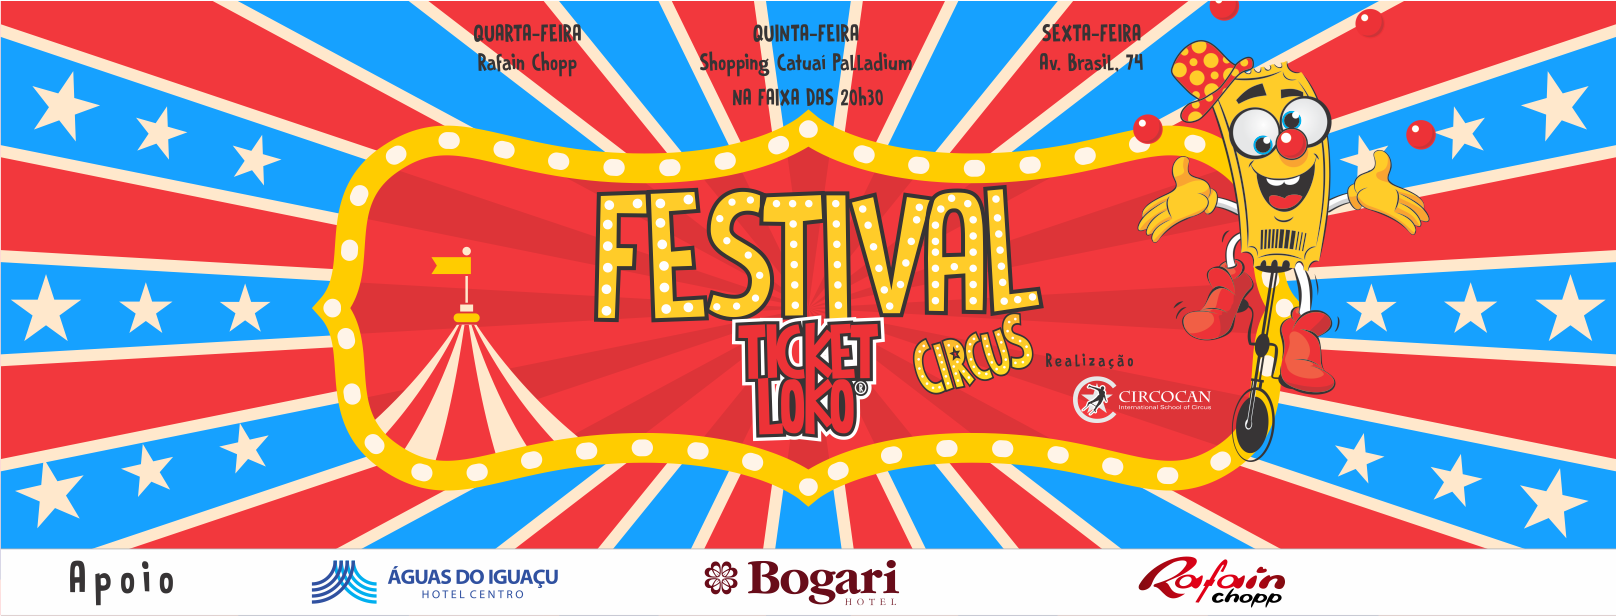 Festival Circus Ticket Loko